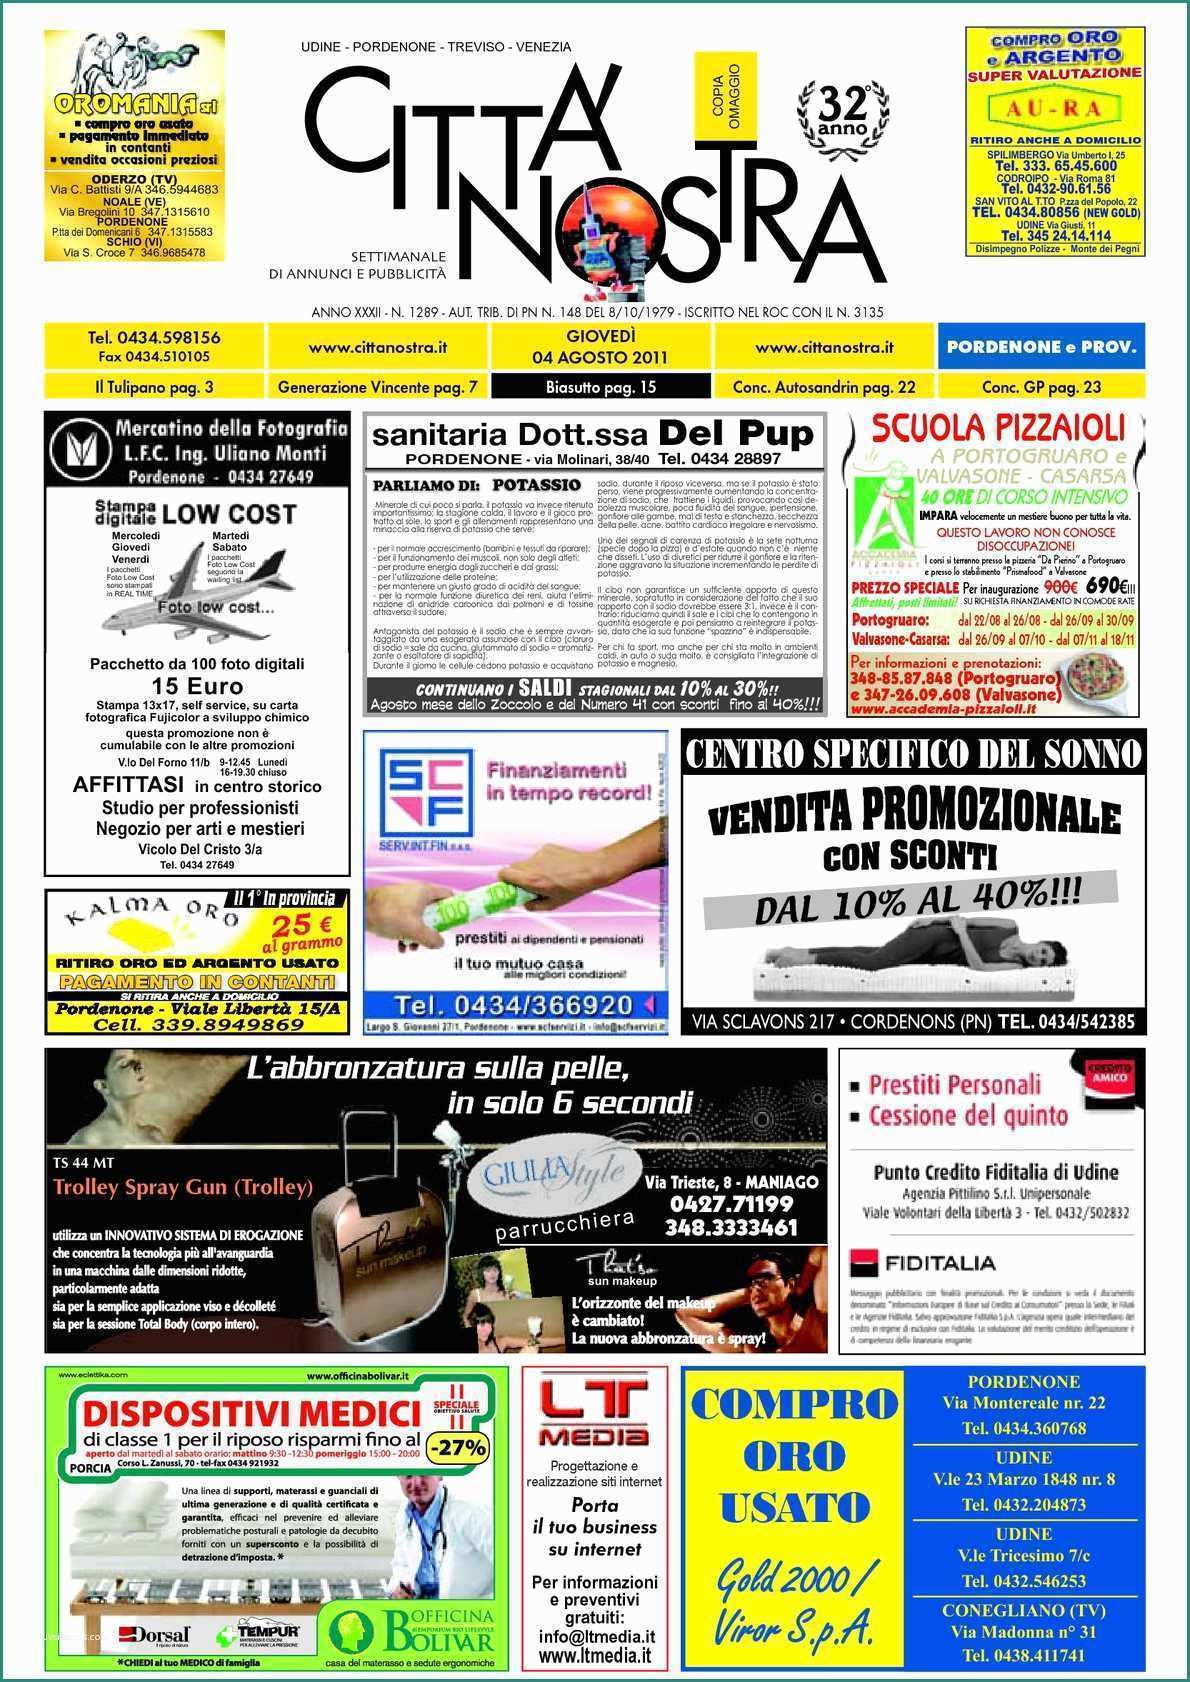 Carrozzine Per Disabili E Calaméo Citt  Nostra Pordenone Del 04 08 2011 N 1289